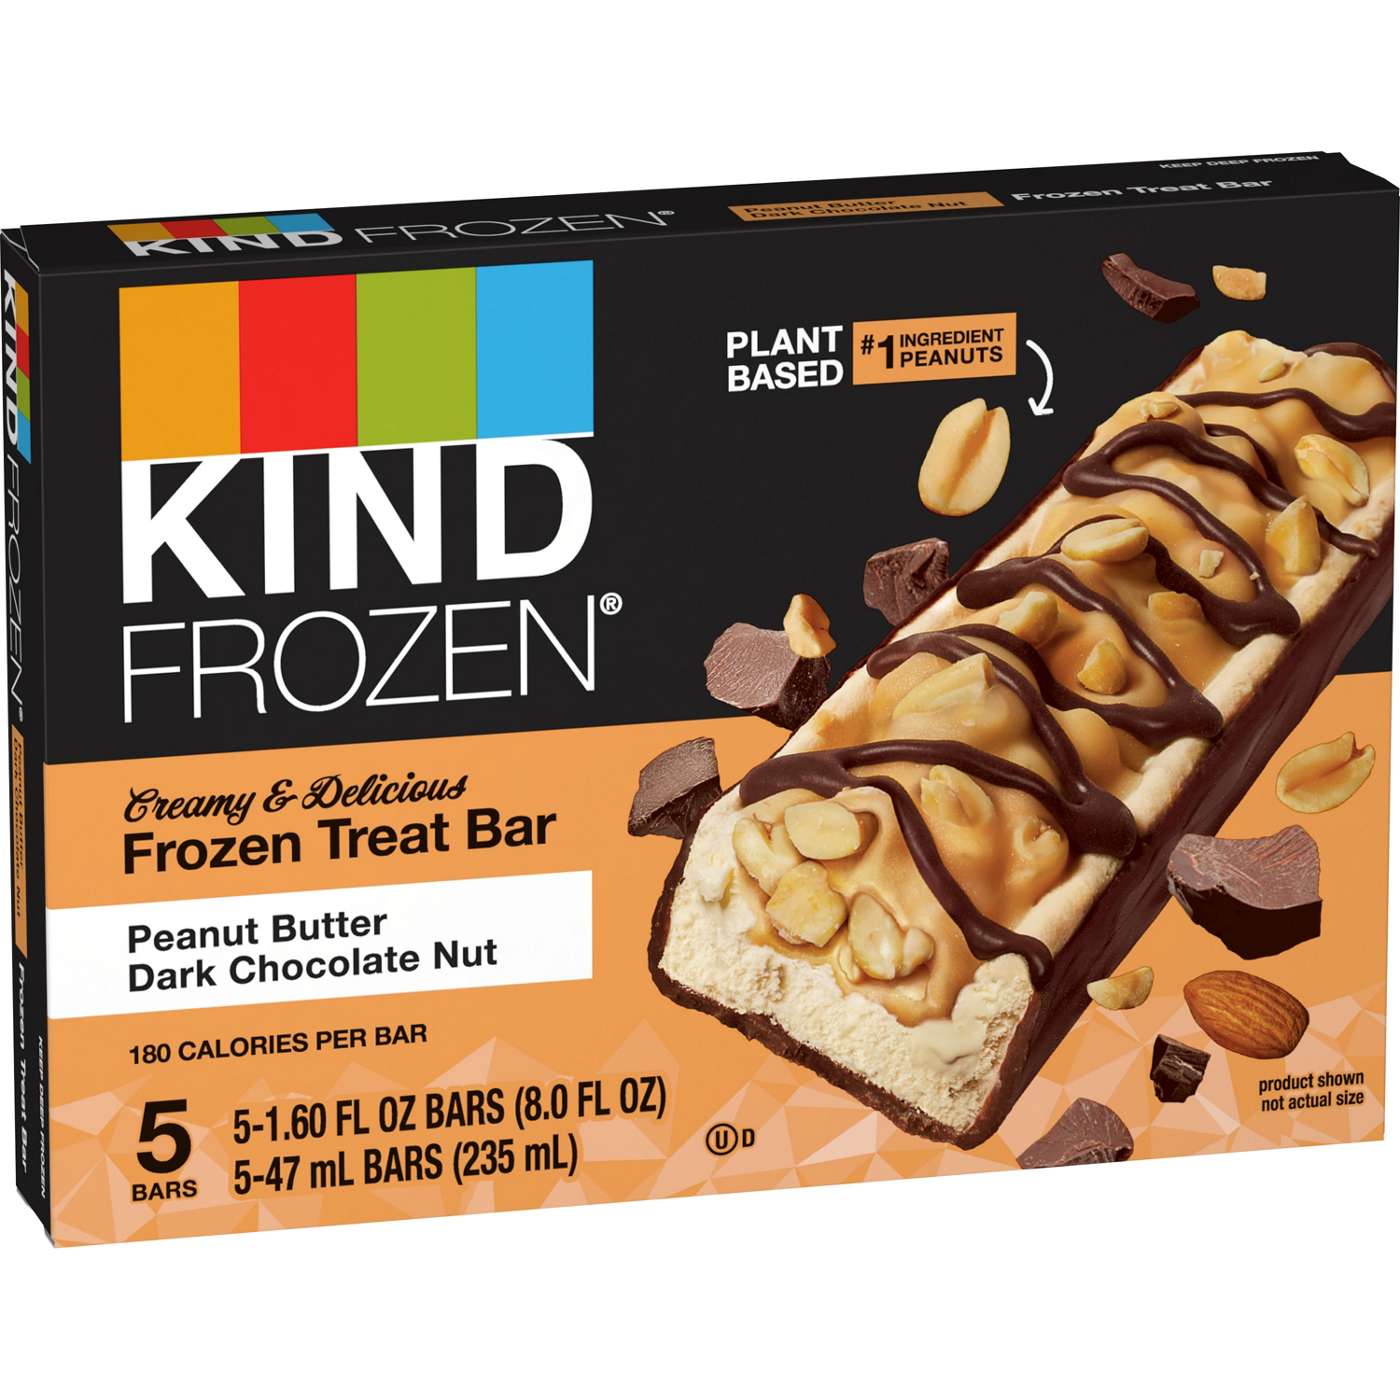 Kind Frozen Dark Chocolate Peanut Butter Frozen Treat Bars; image 1 of 2